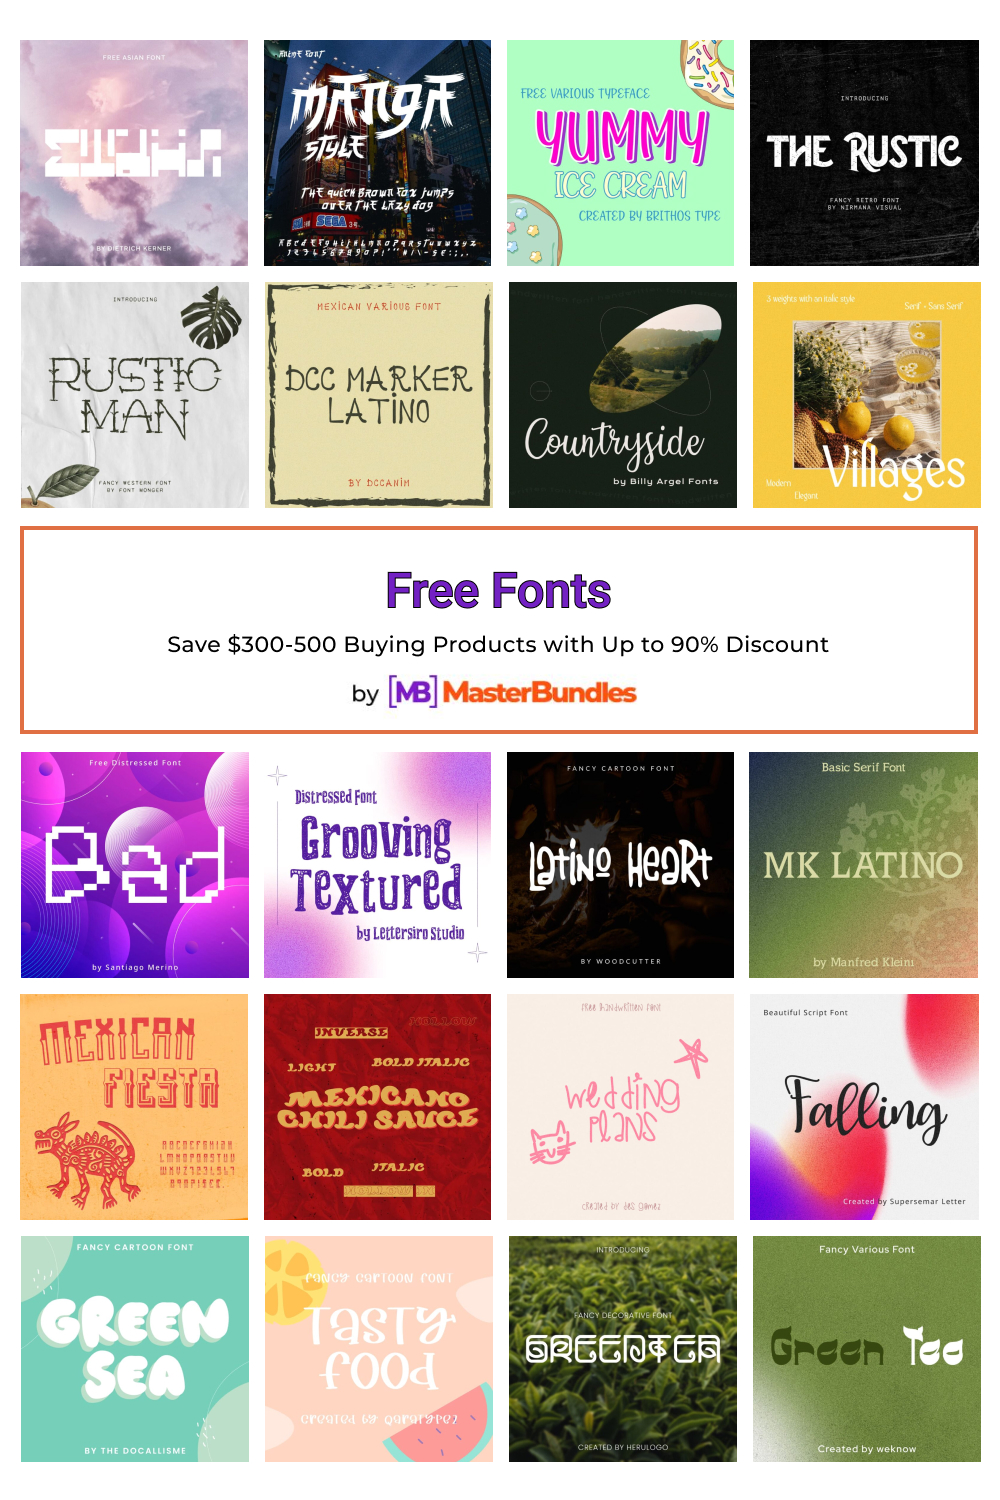 free fonts pinterest image.